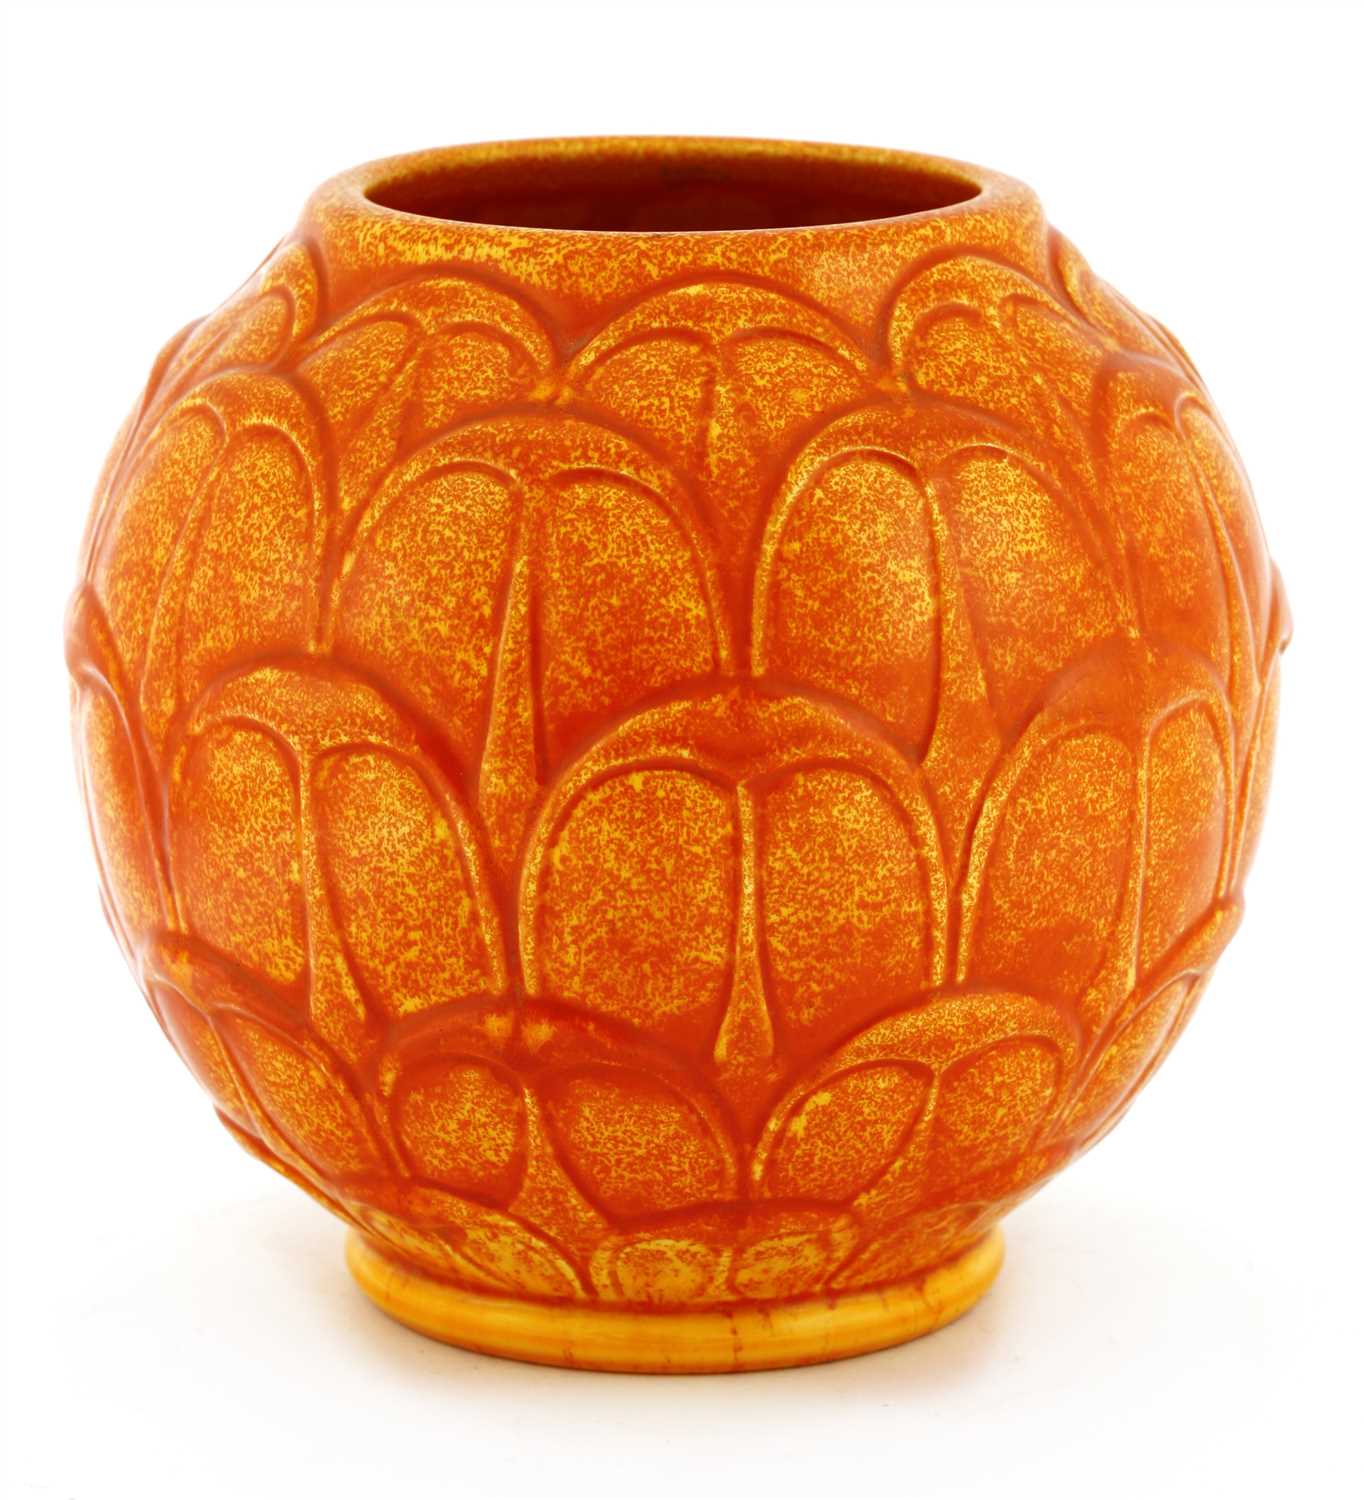 Lot 42 - A Pilkington Lancastrian orange artichoke vase